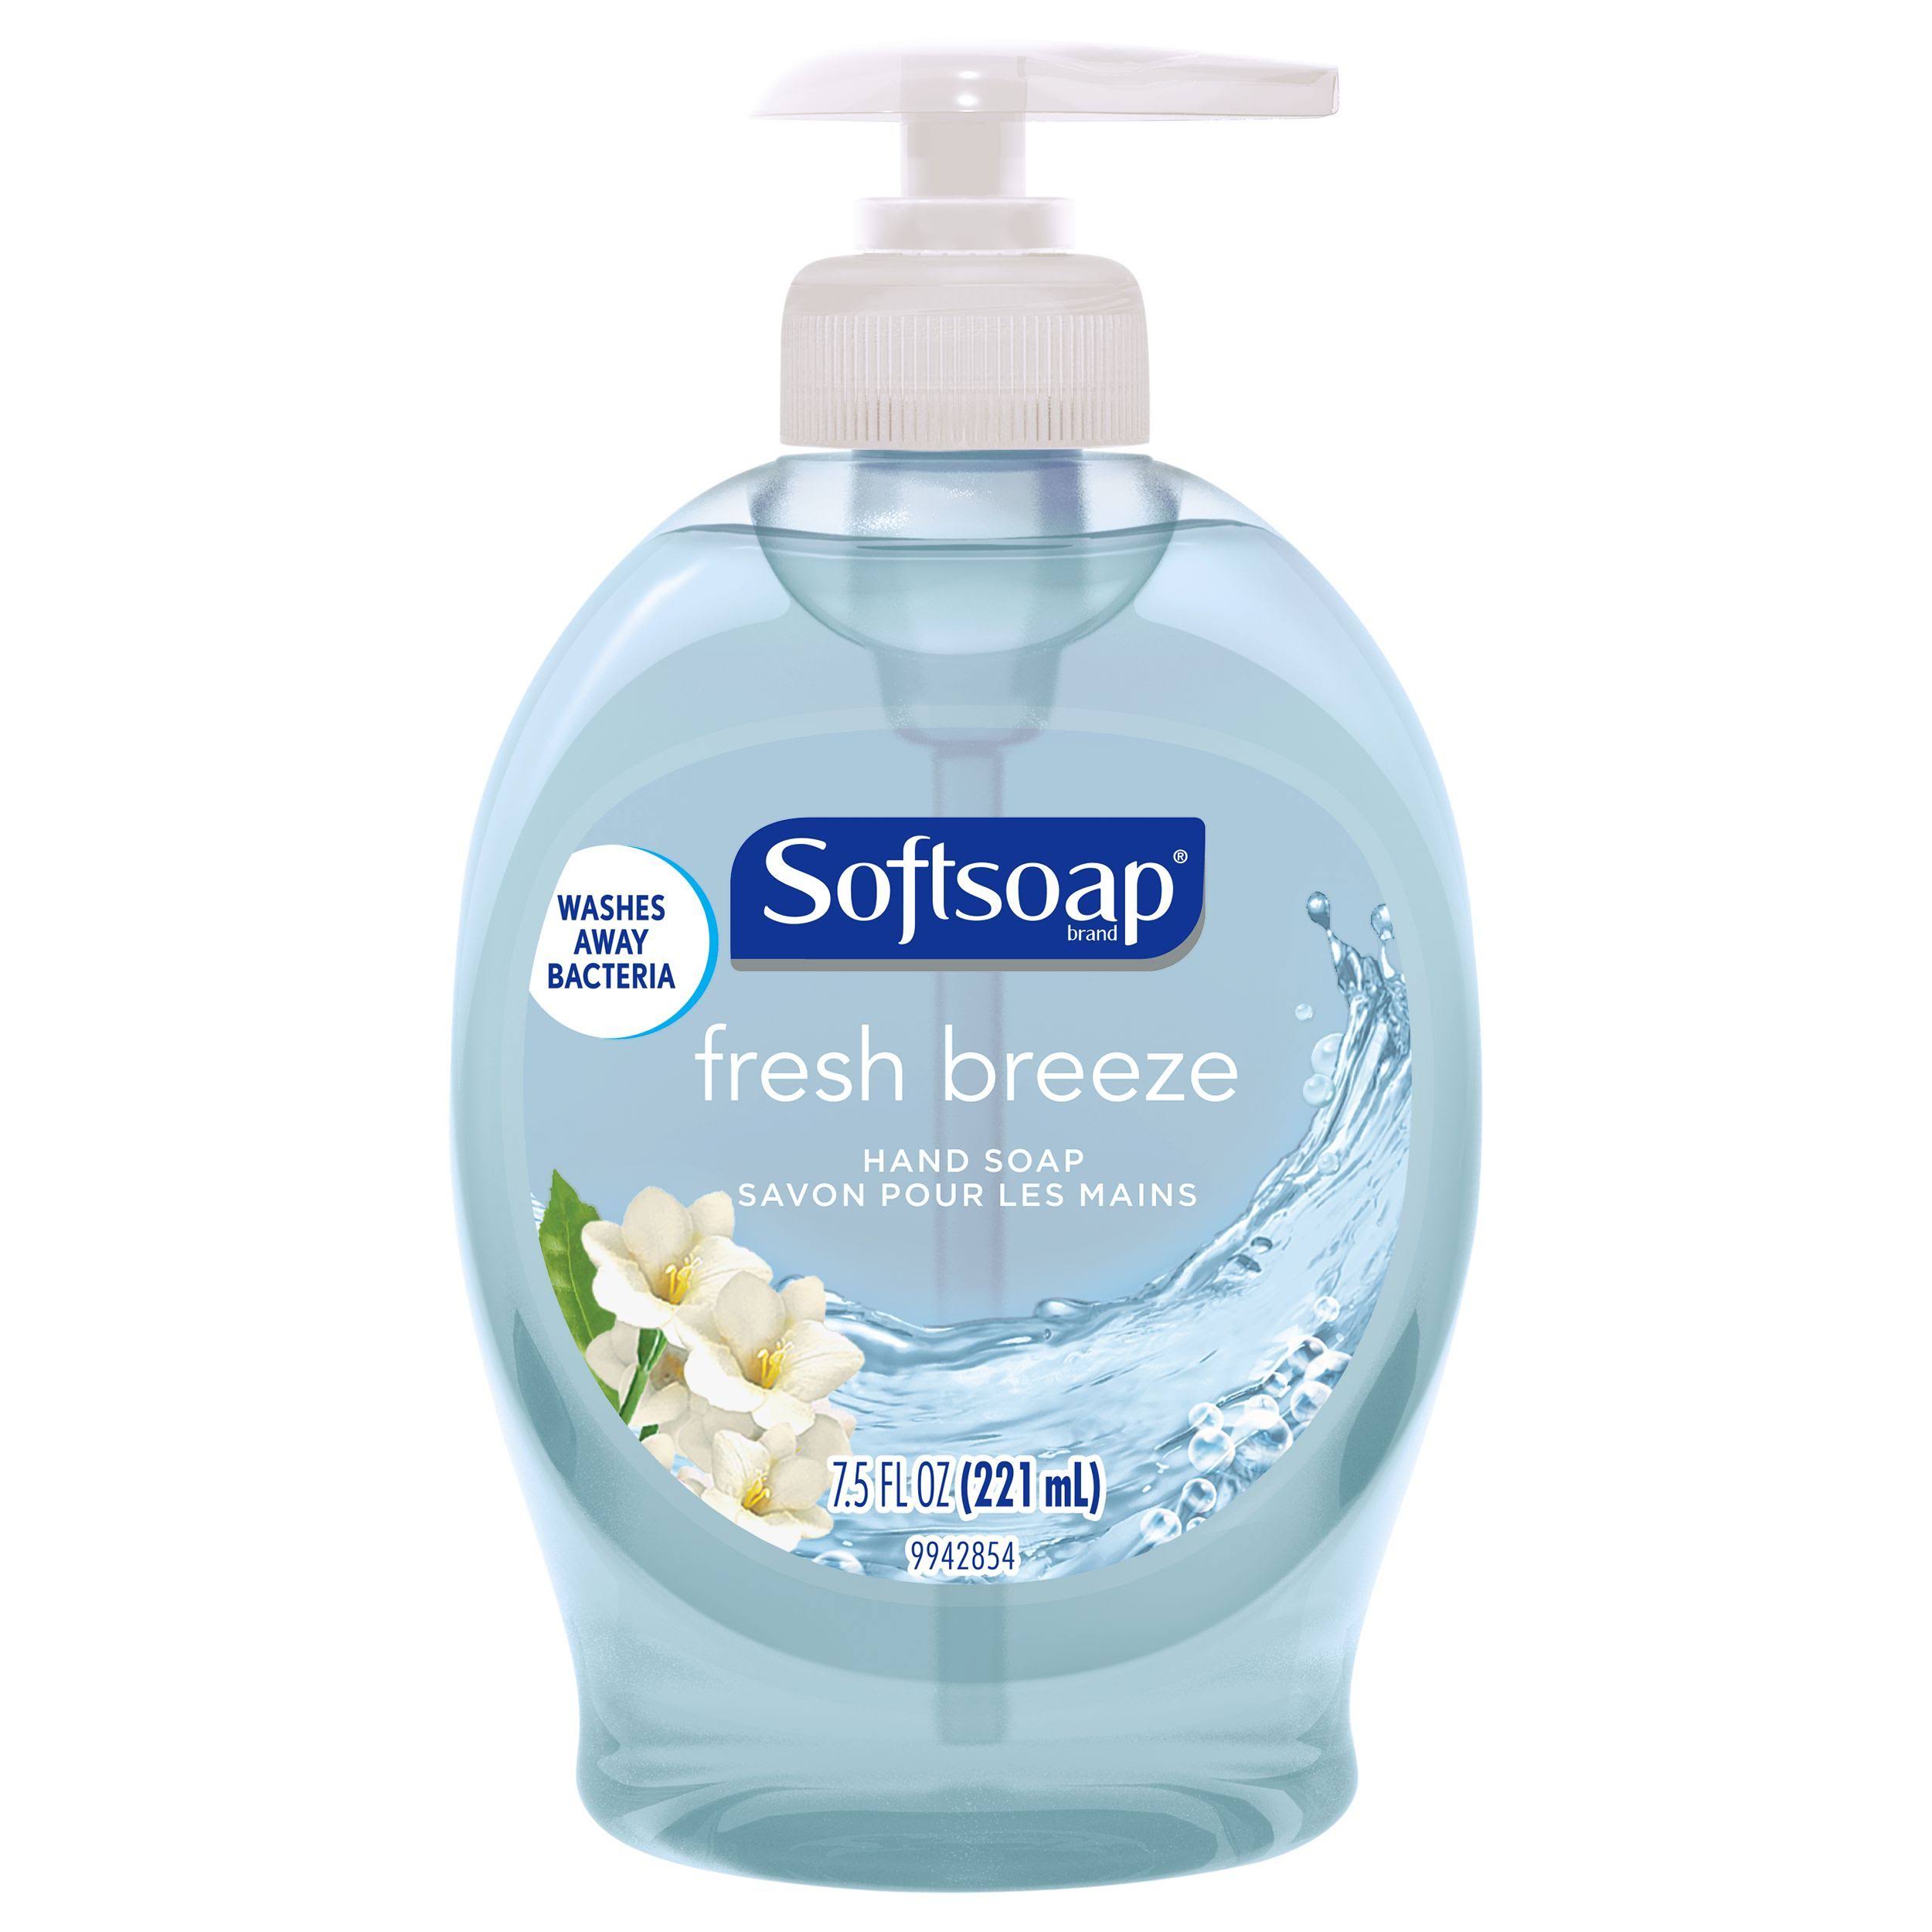 Softsoap Liquid Hand Soap - Fresh Breeze, 7.5oz